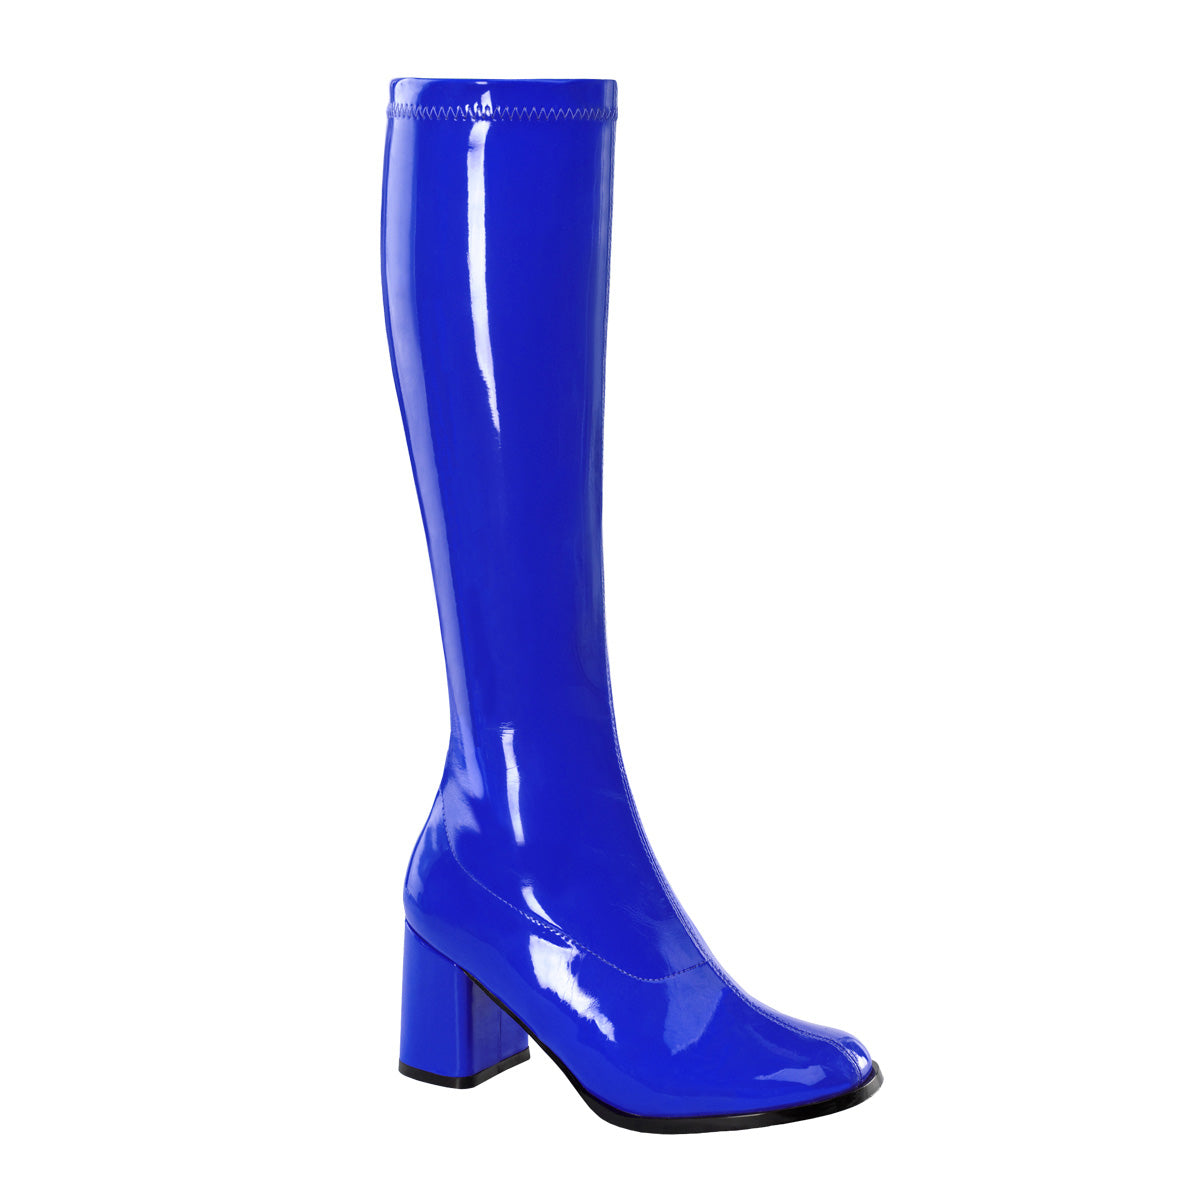 GOGO-300 3 Inch Heel Navy Blue Women's Boots Funtasma Costume Shoes